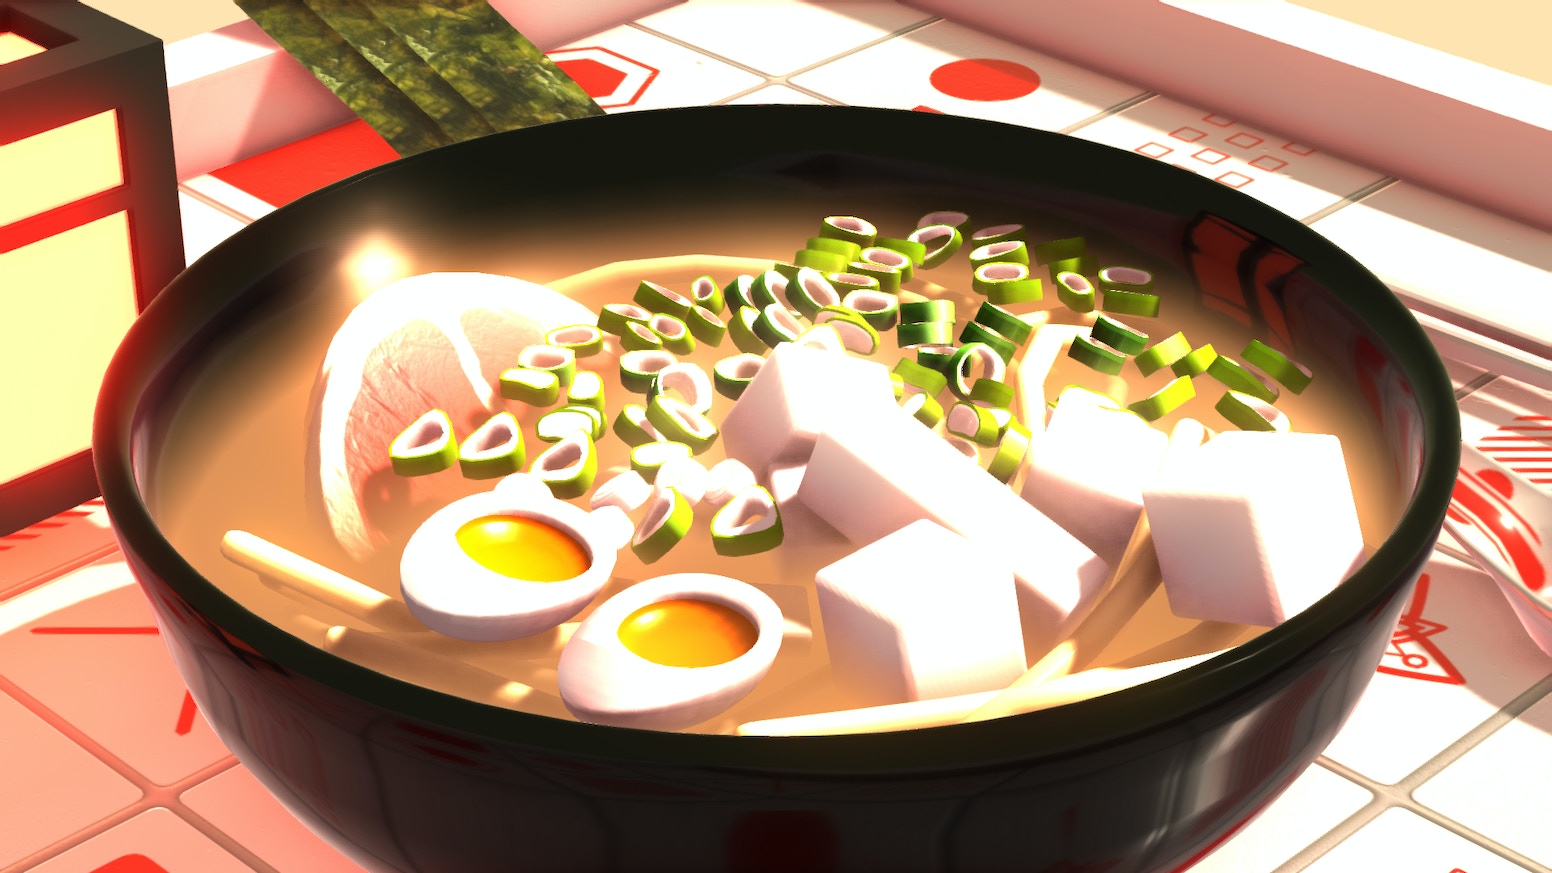 NOUR food art game / interactive food sim